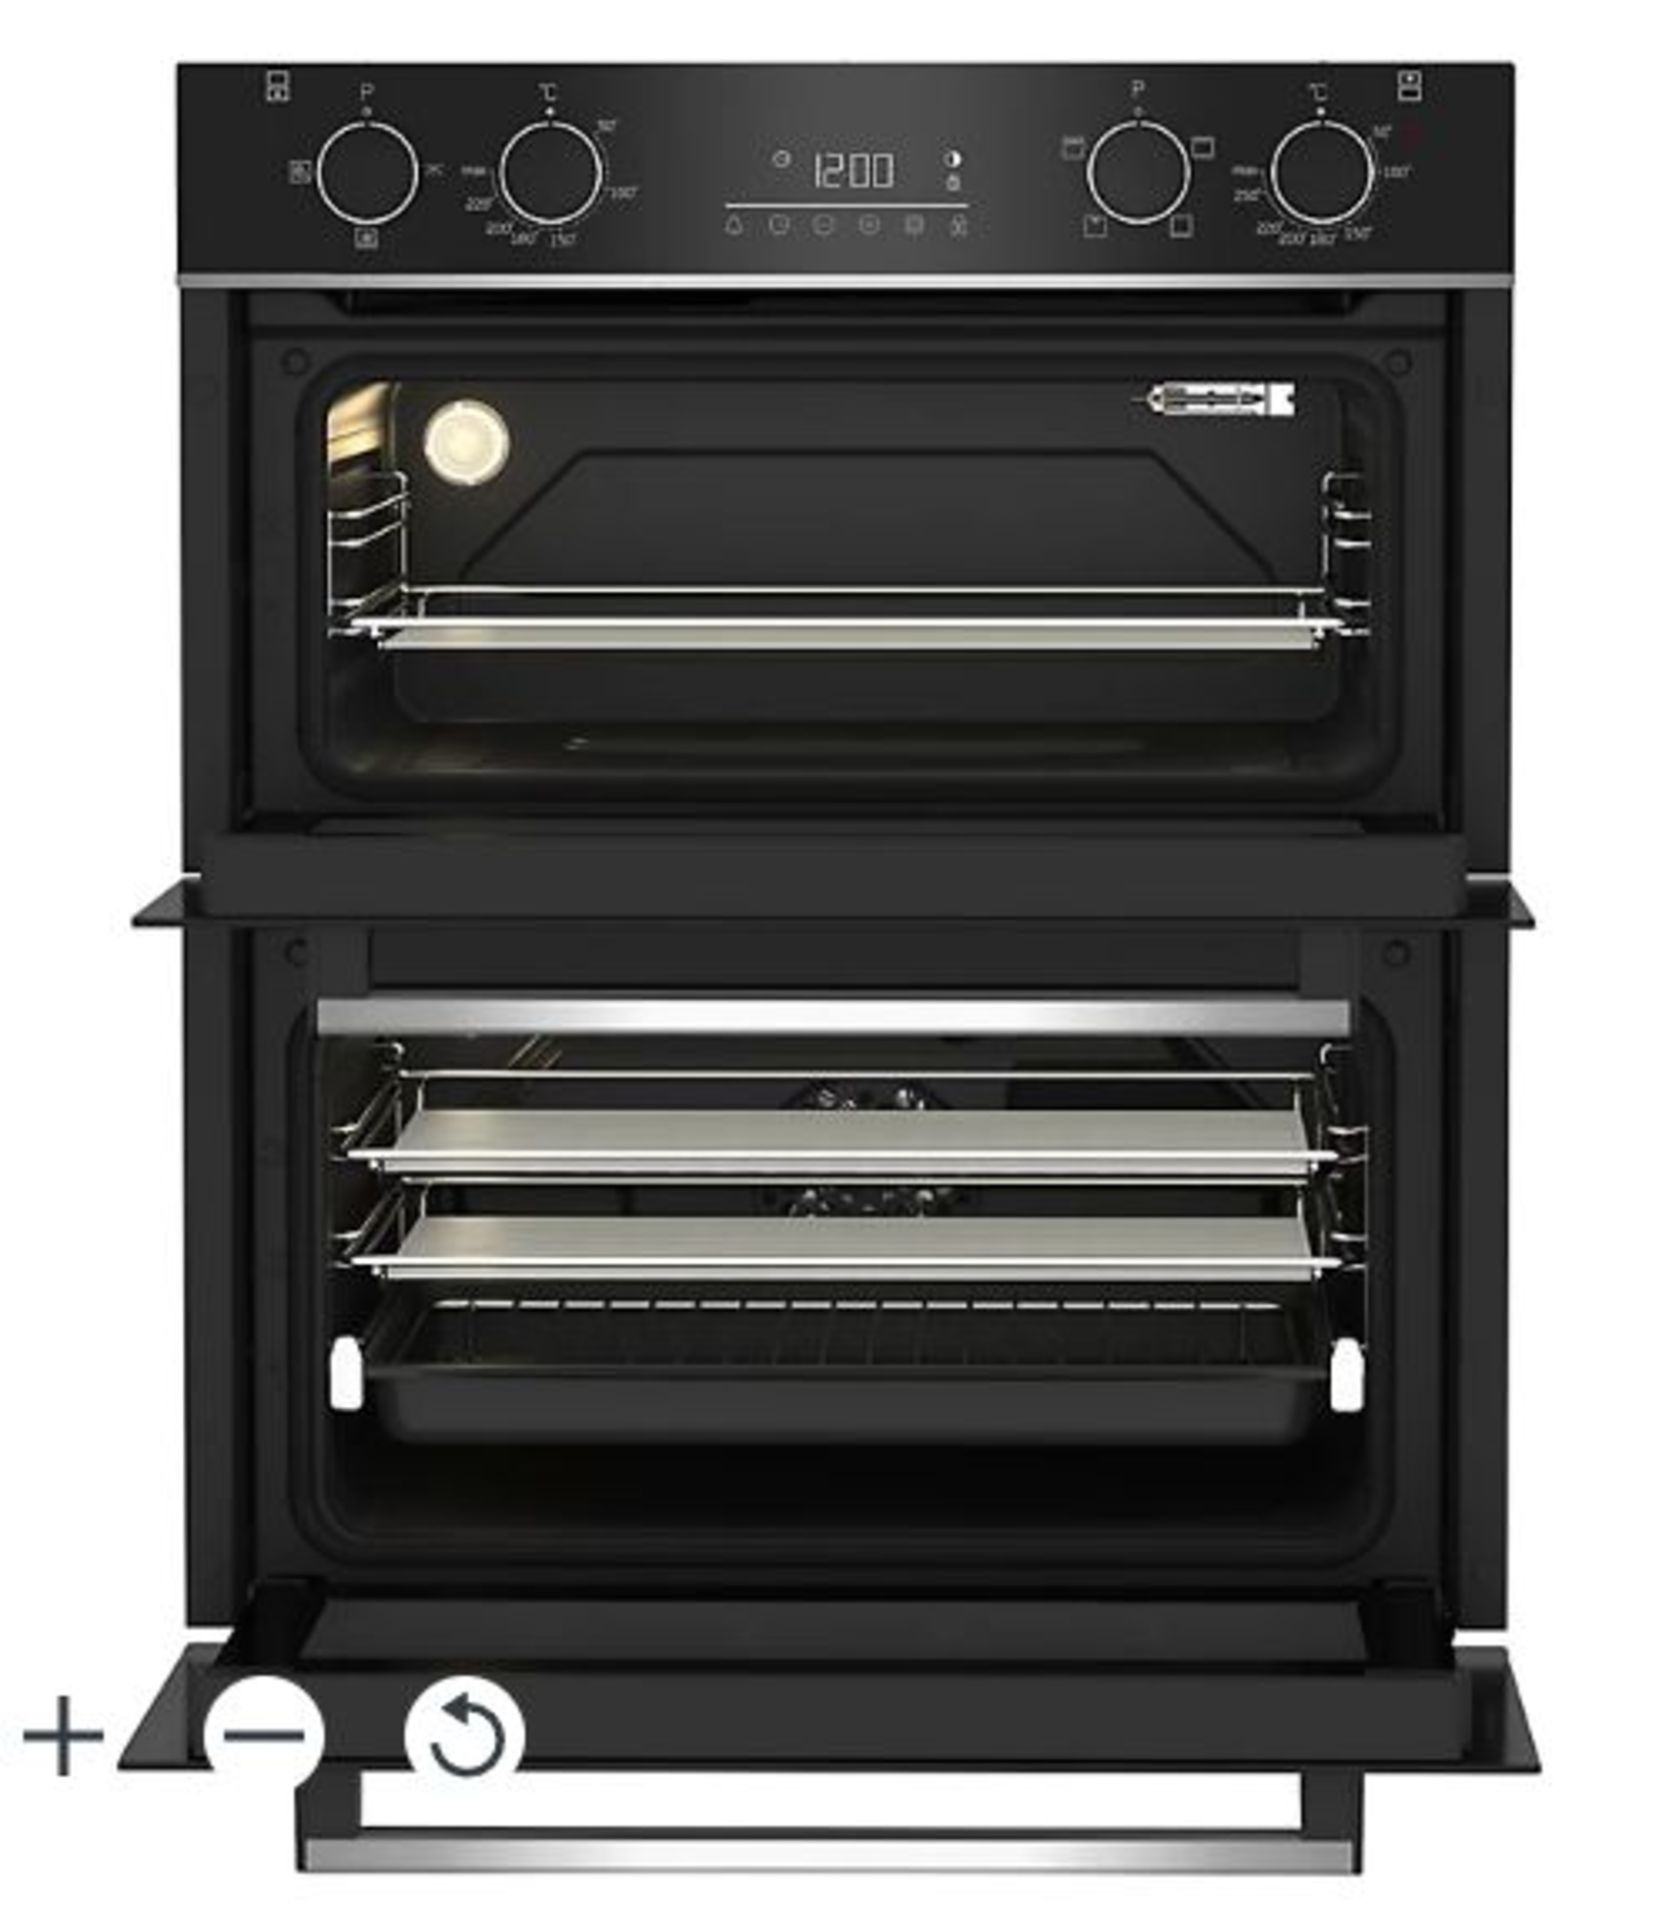 Beko BBTQF24300B Built-under Double Oven - Black. - S2. RRP £555.00. This built-under double oven - Image 2 of 2